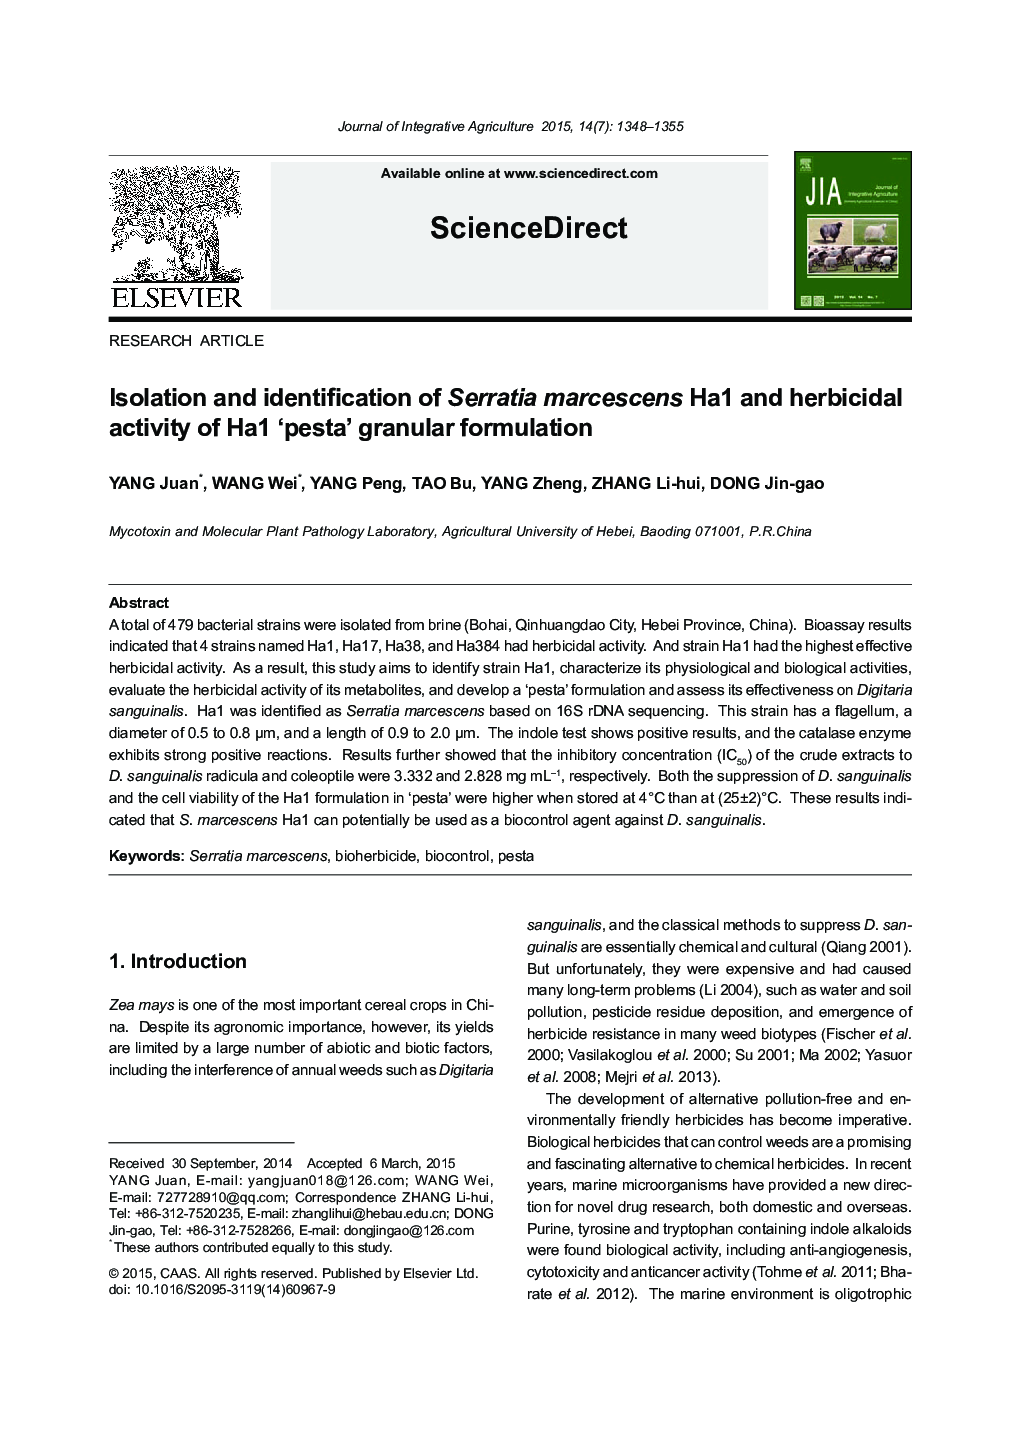 Isolation and identification of Serratia marcescens Ha1 and herbicidal activity of Ha1 ‘pesta’ granular formulation